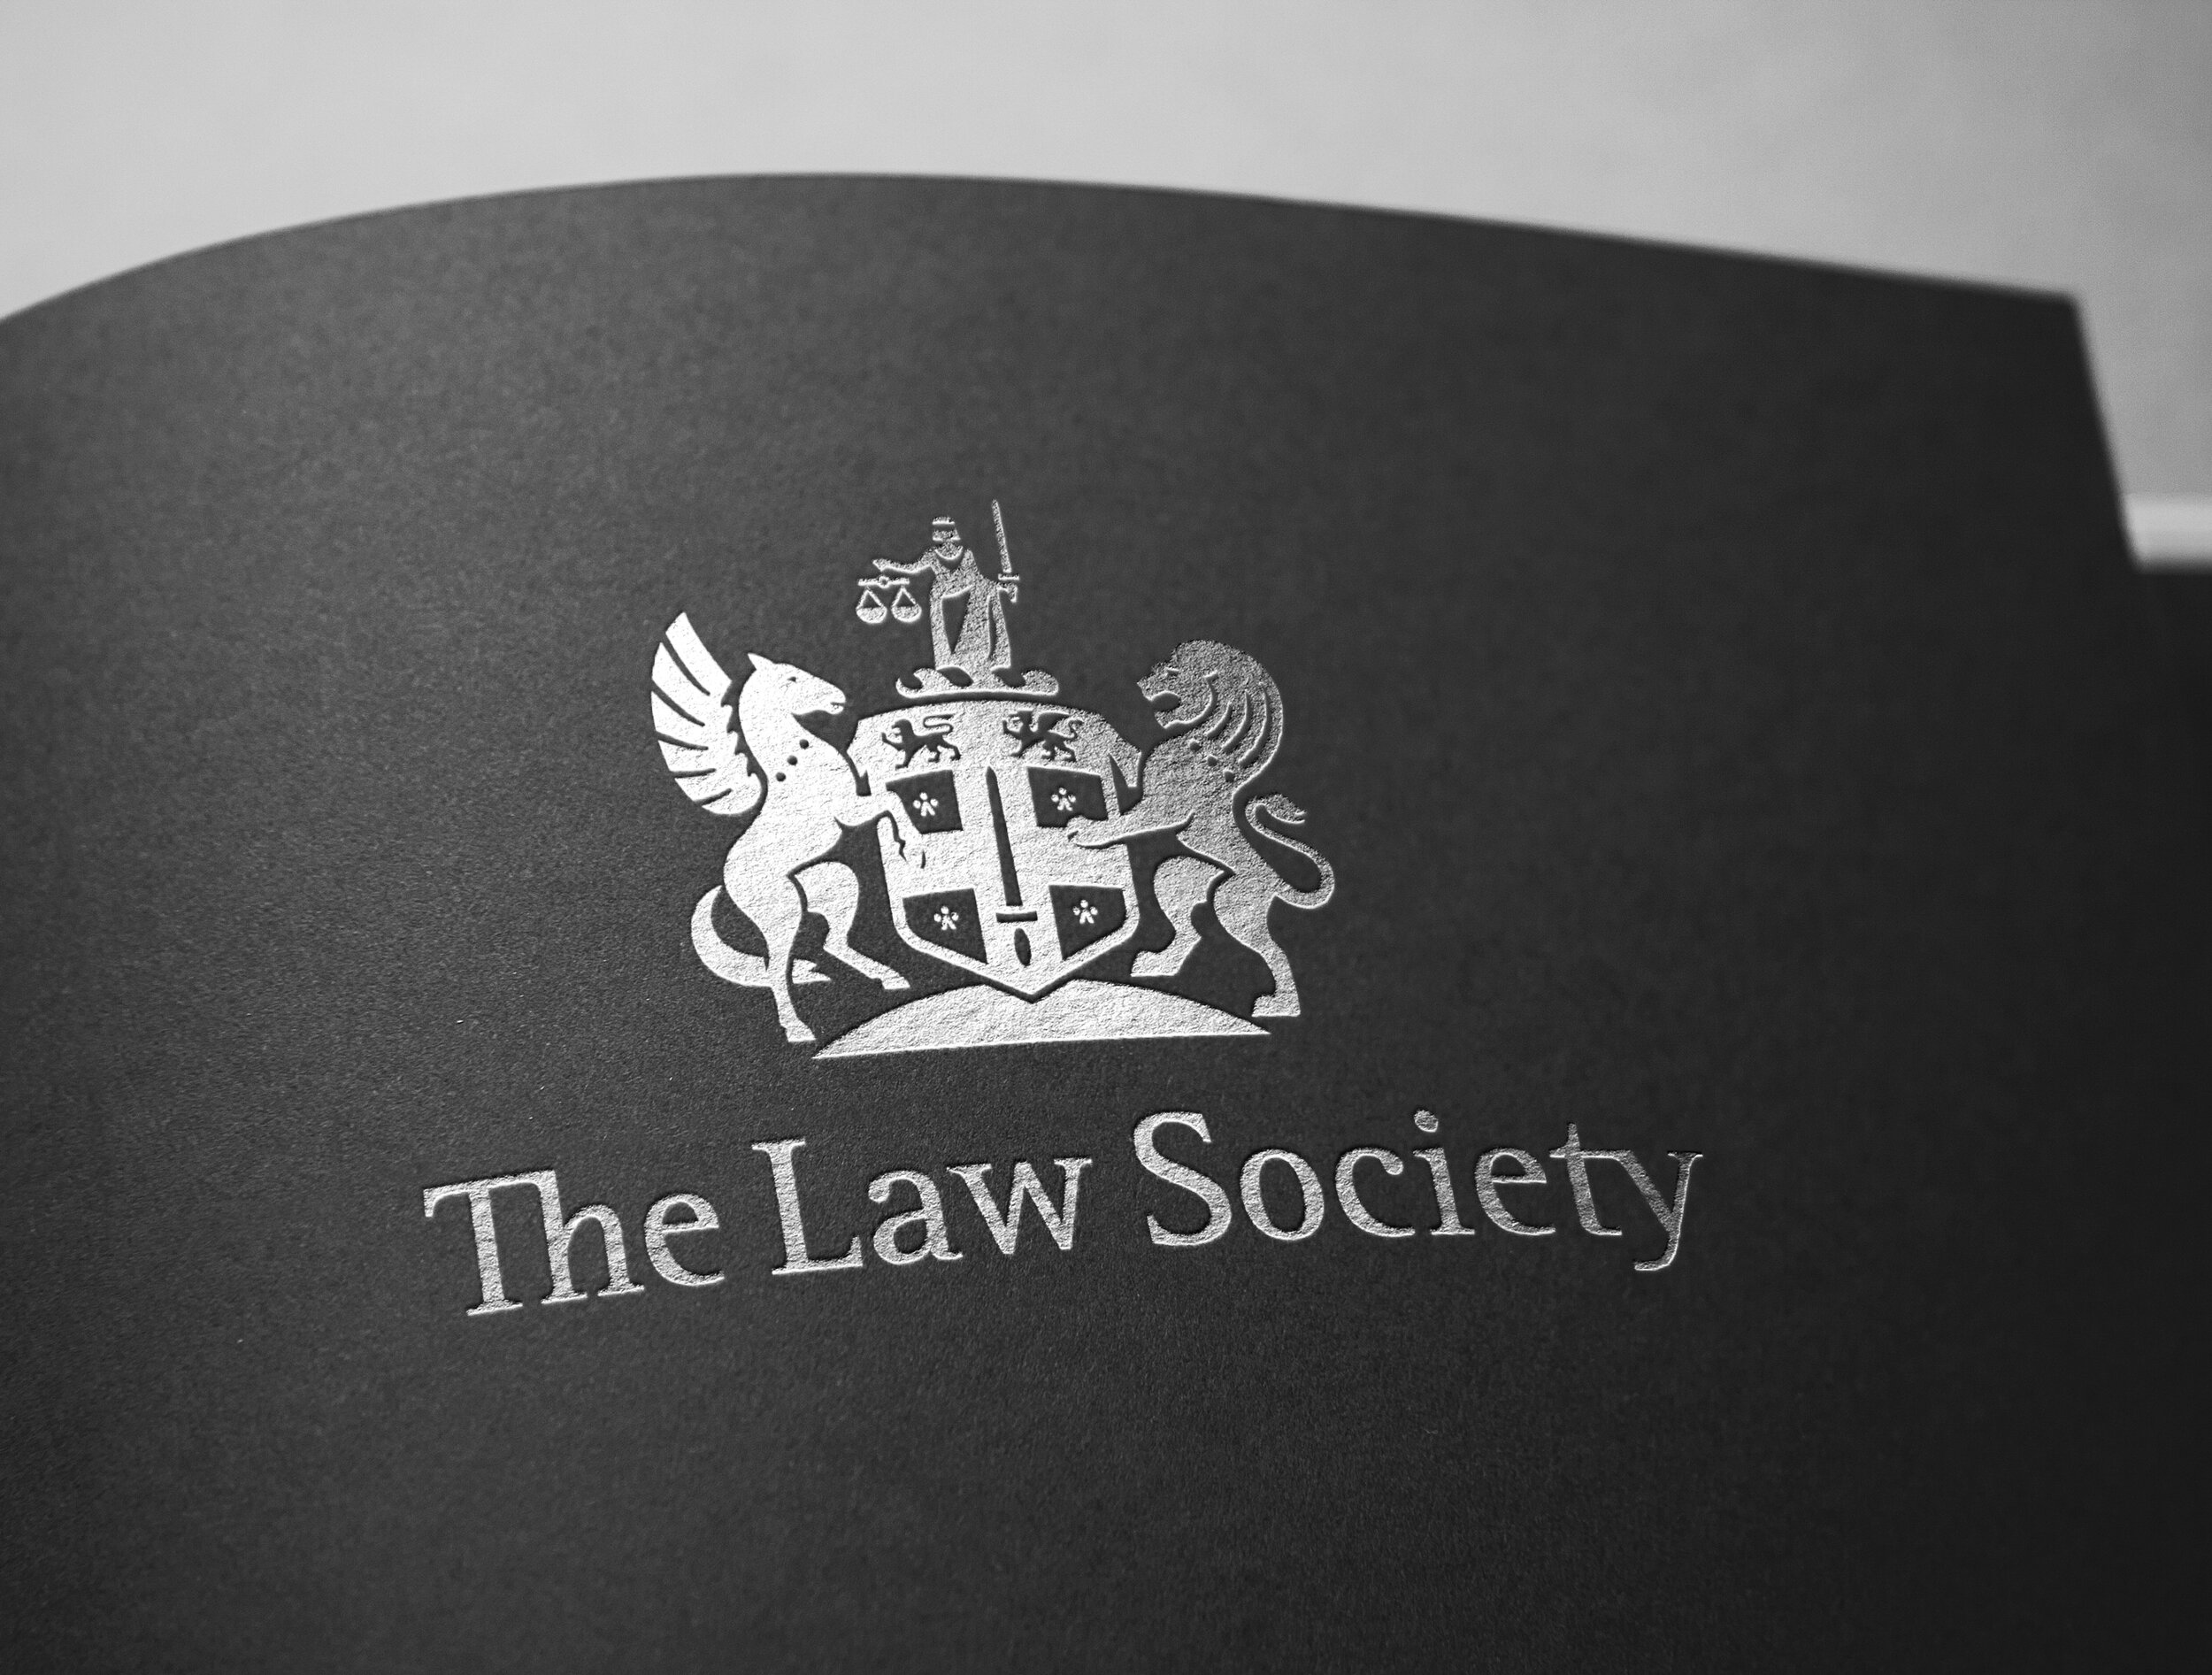 Andy Bain branding design The Law Society